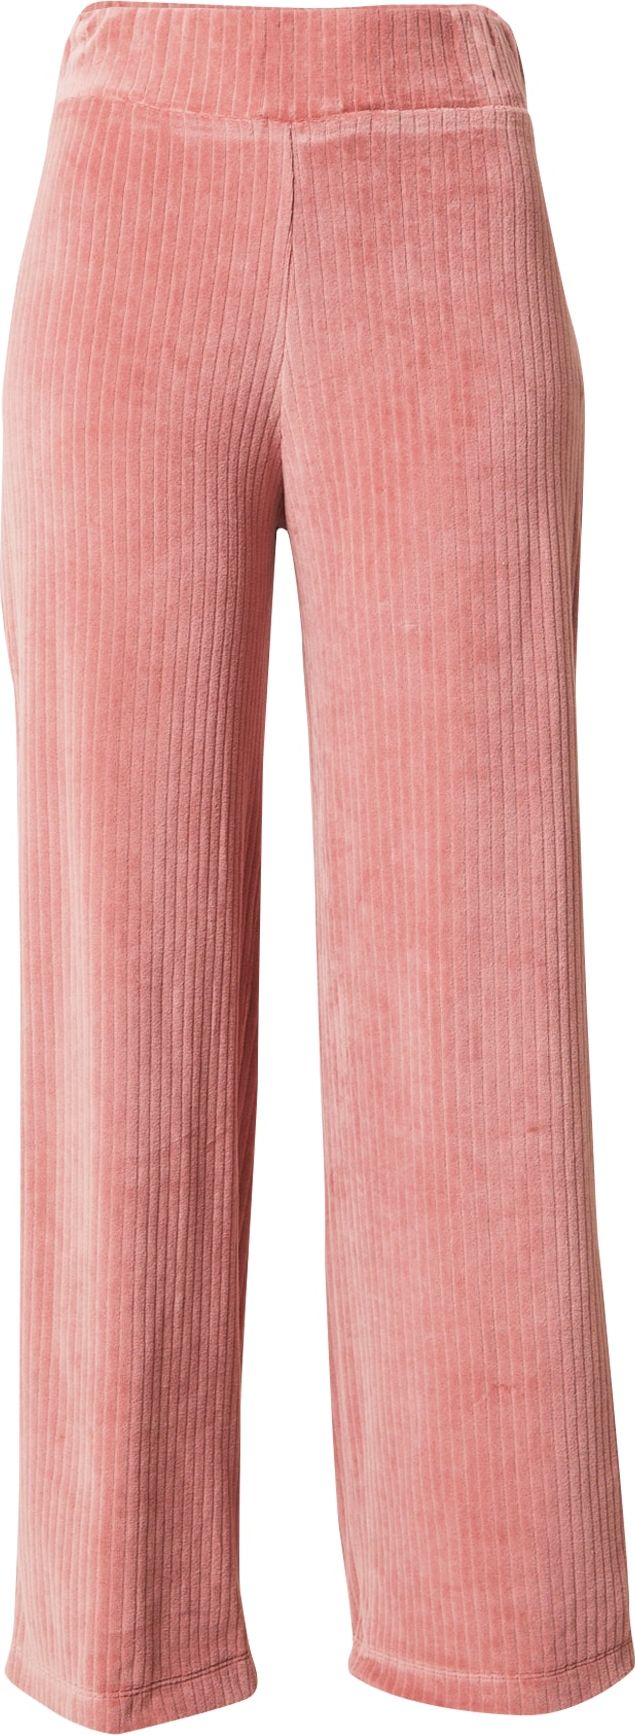 Kauf Dich Glücklich Kalhoty růžová